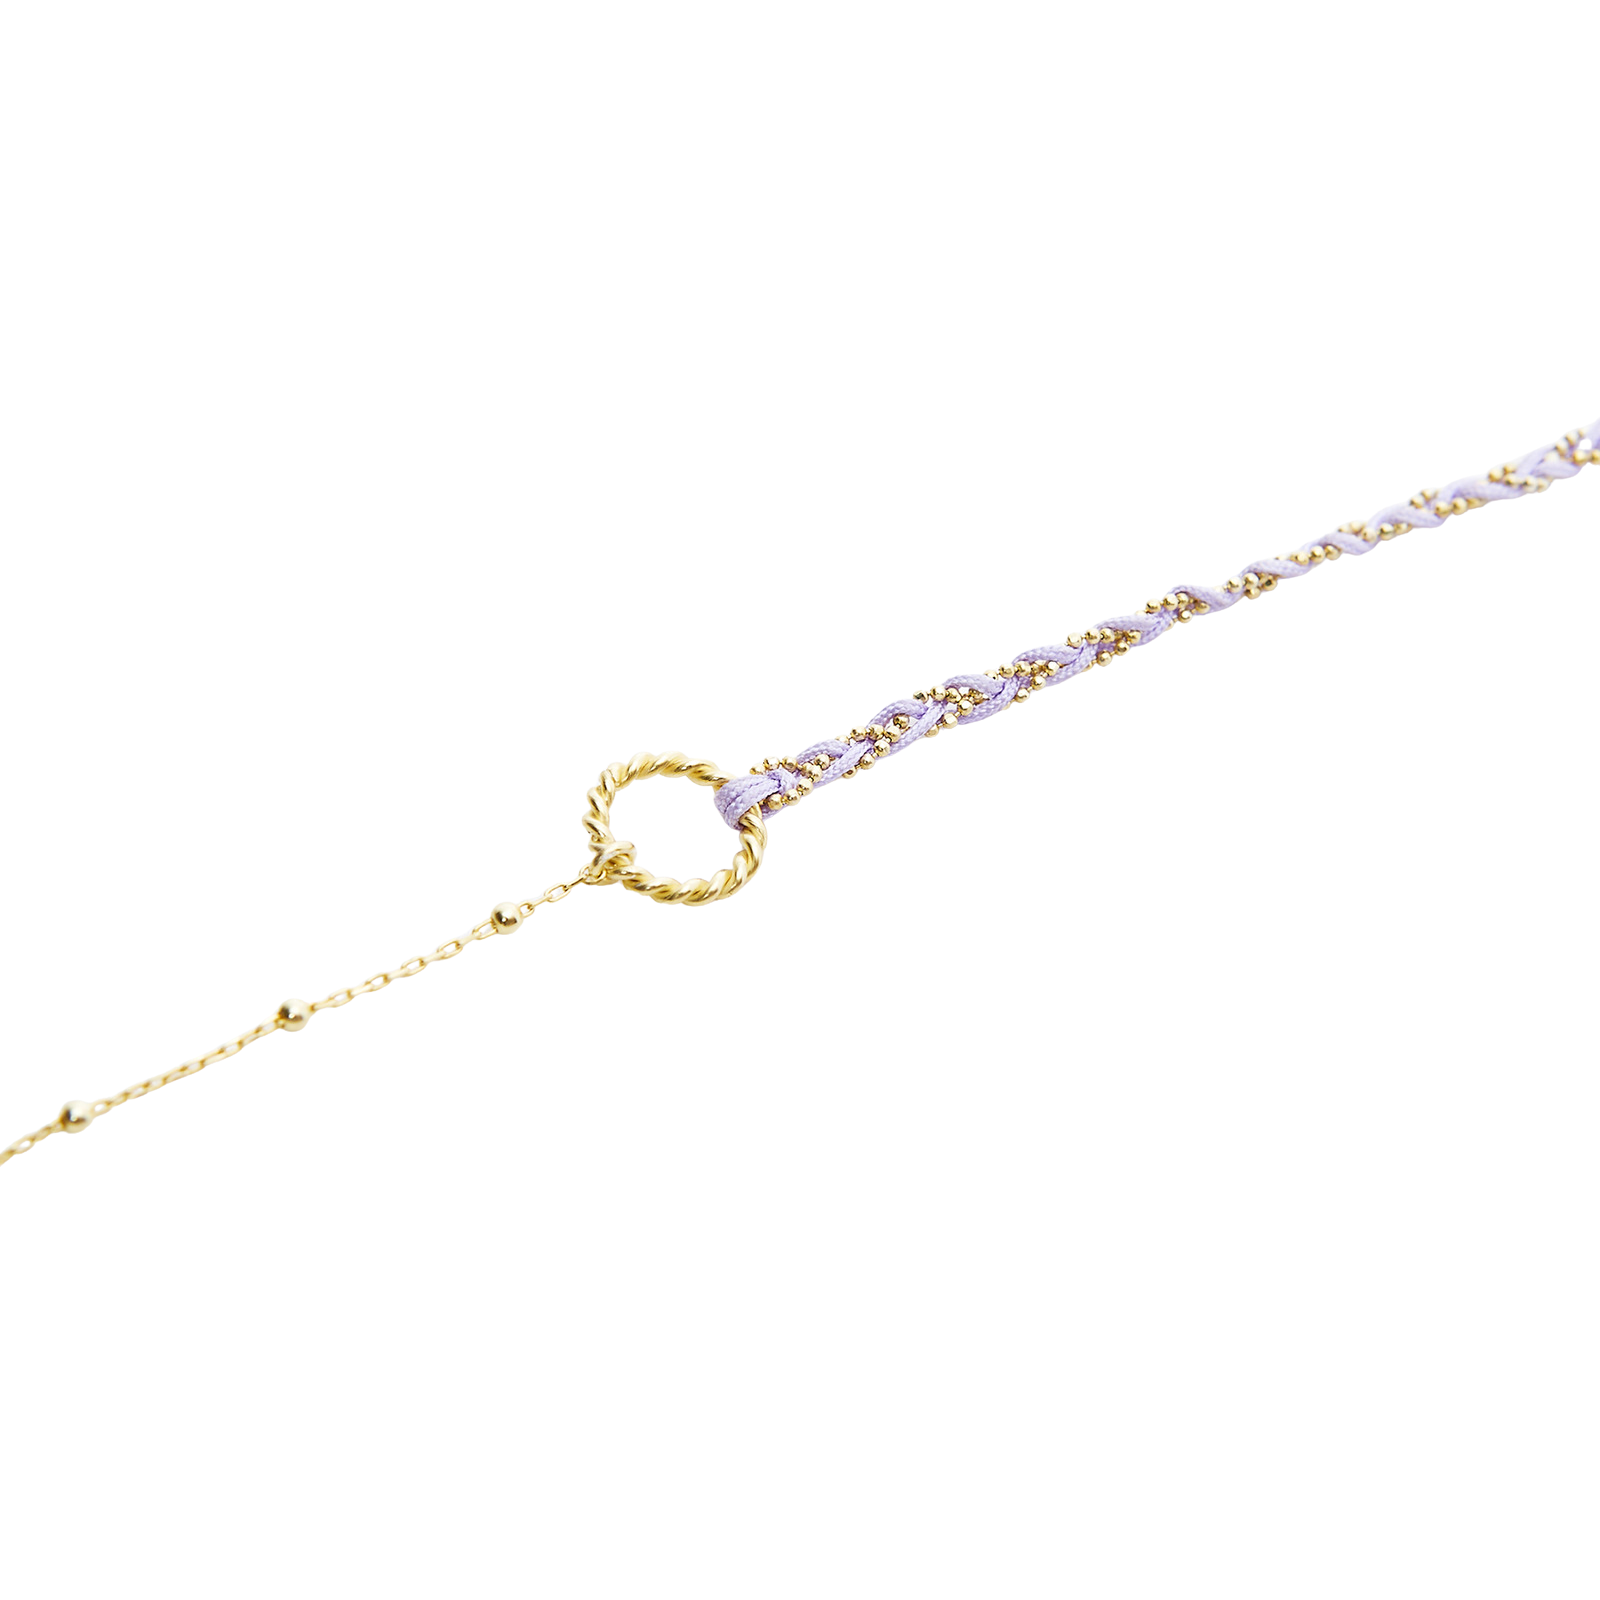 Handmade Rope Braided Sterling Silver Beaded Chain Friendship Bracelet